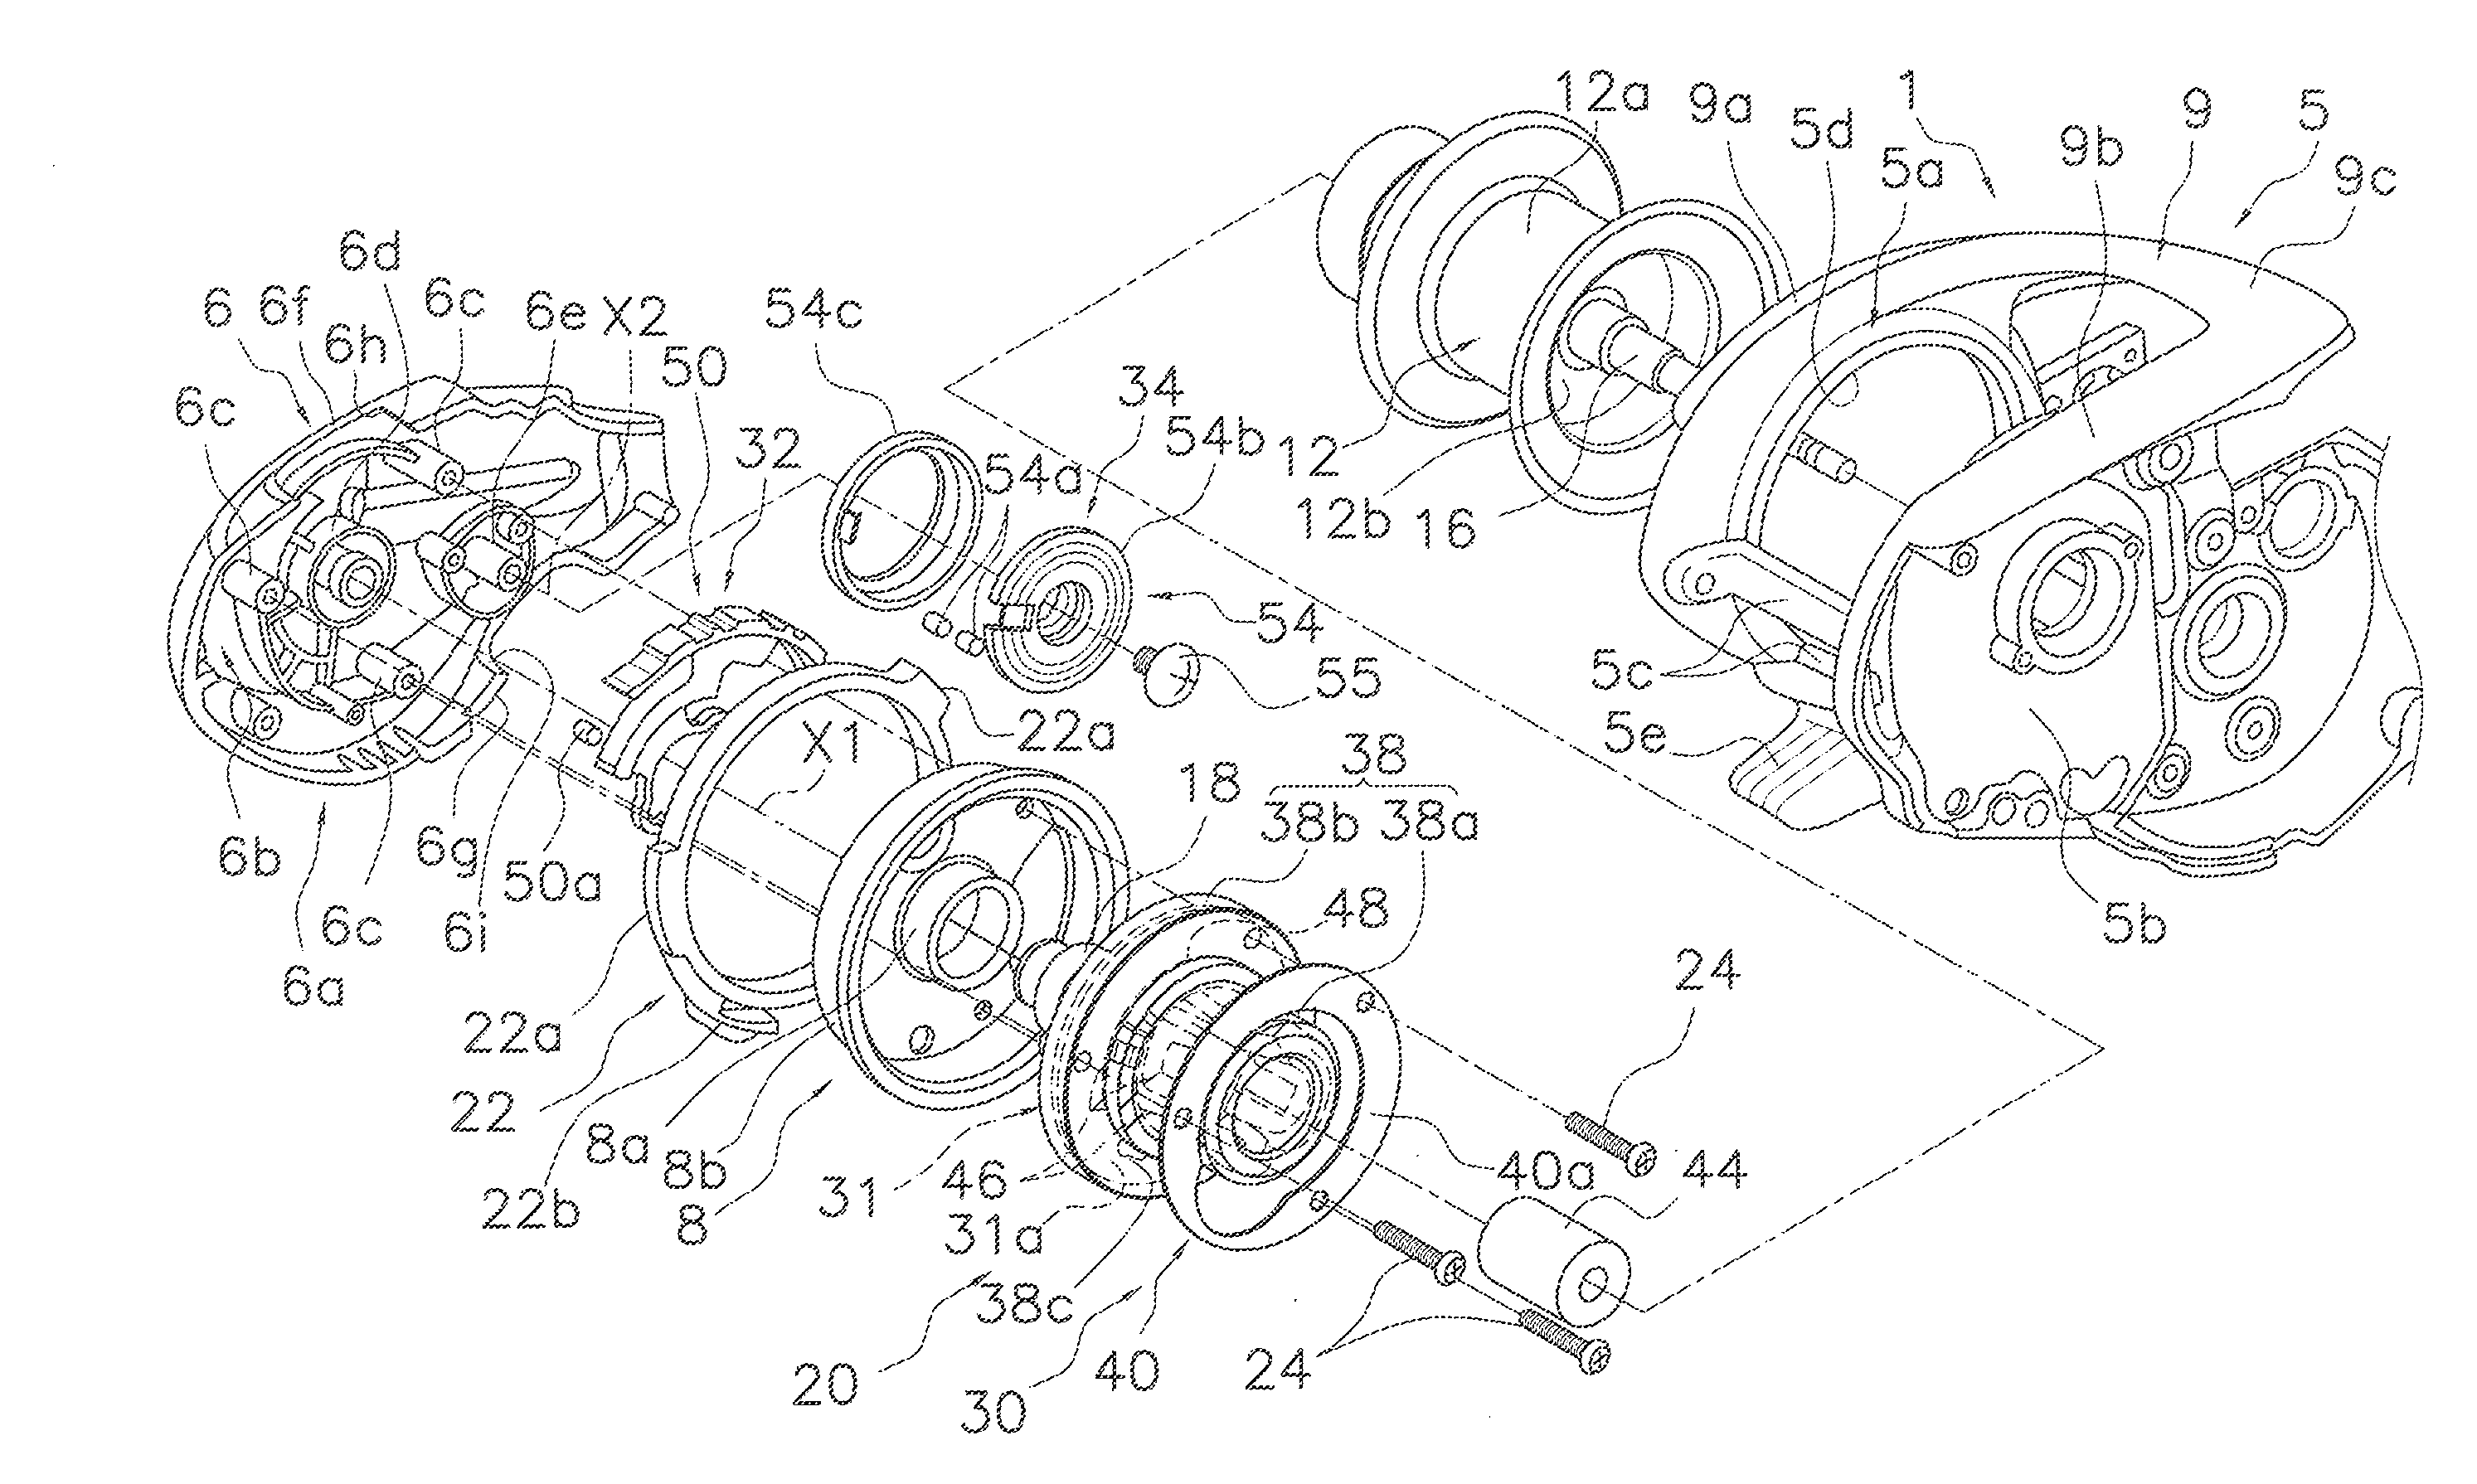 Dual-bearing reel